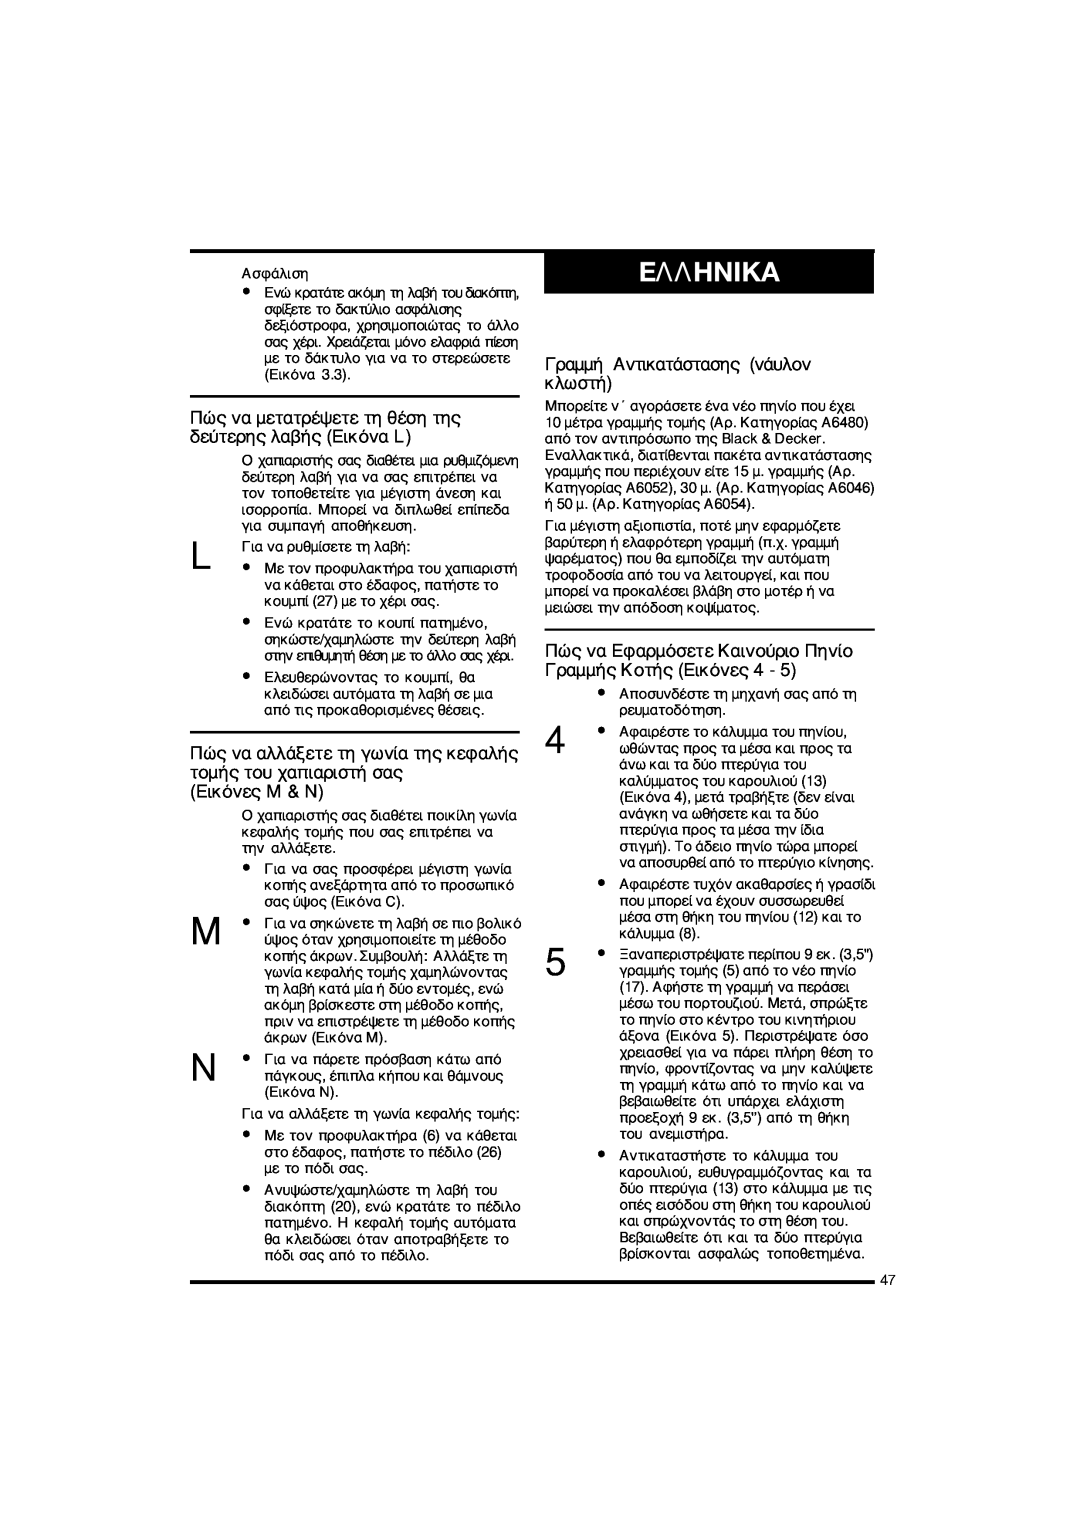 Black & Decker GL570 instruction manual E Hnika 